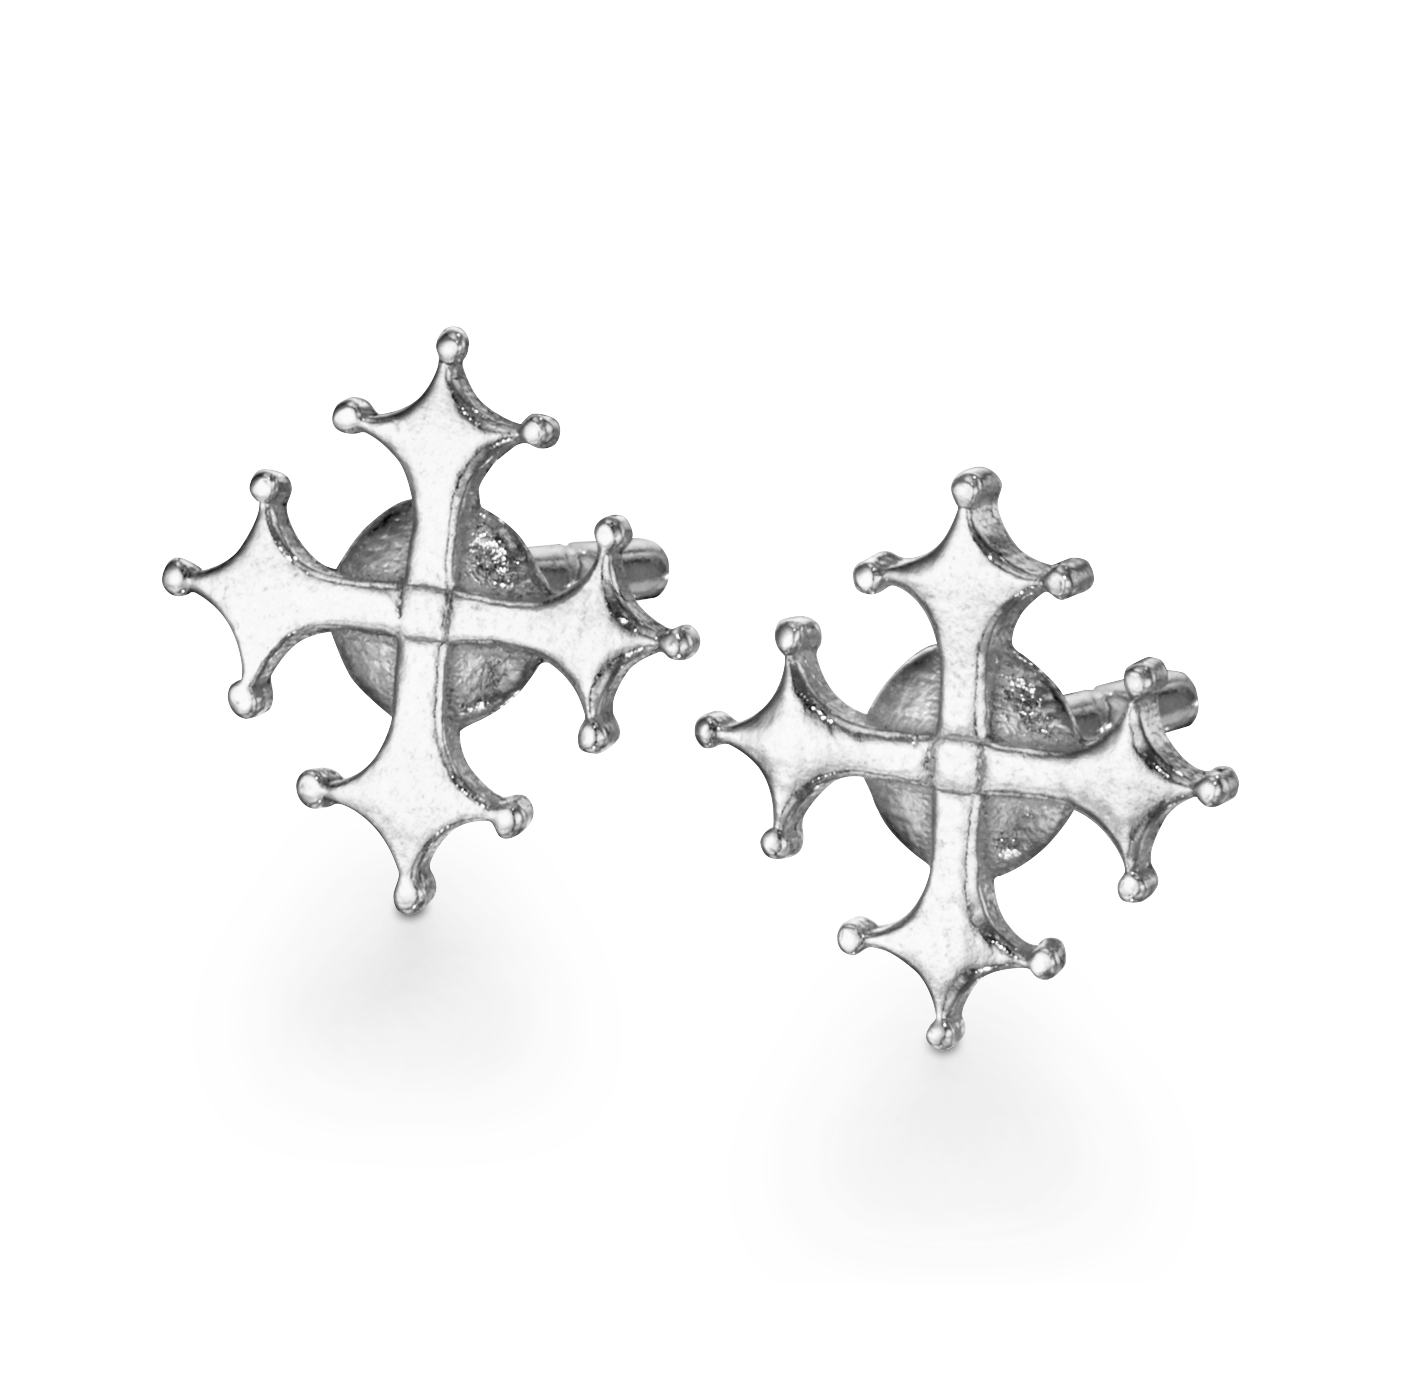 Maltese Cross Stud Earrings